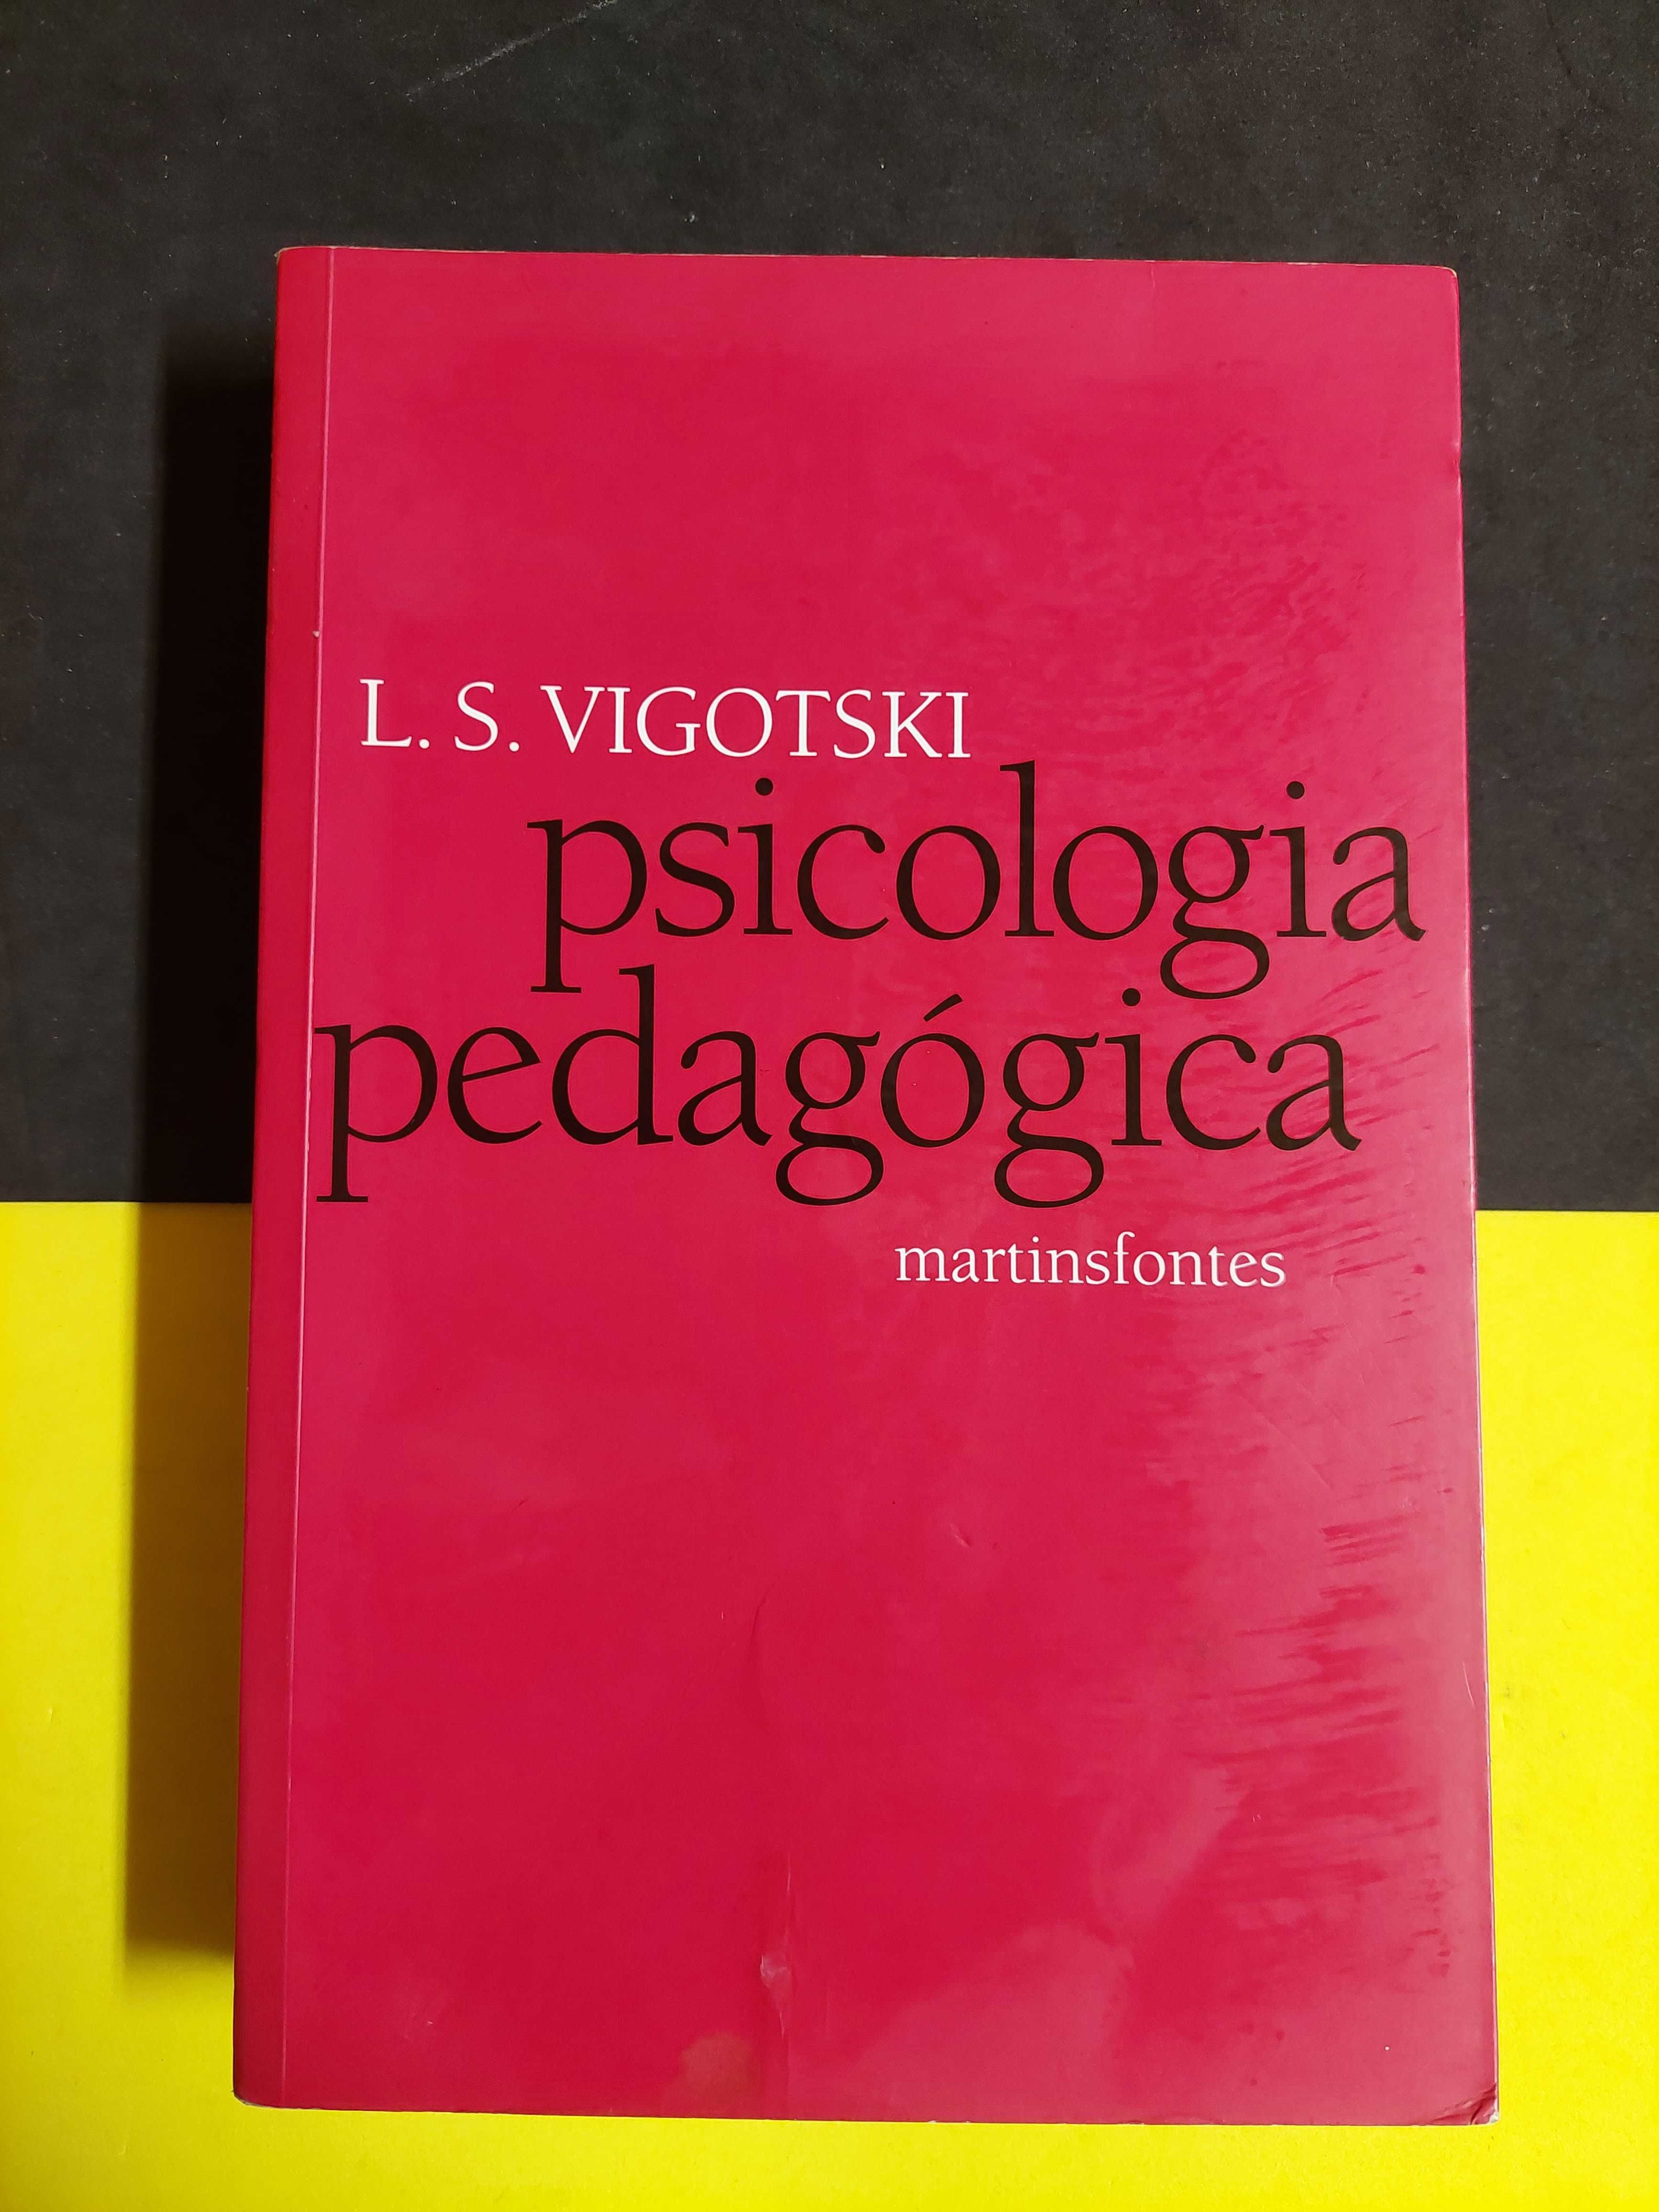 L.S. Vigotski - Psicologia Pedagógica